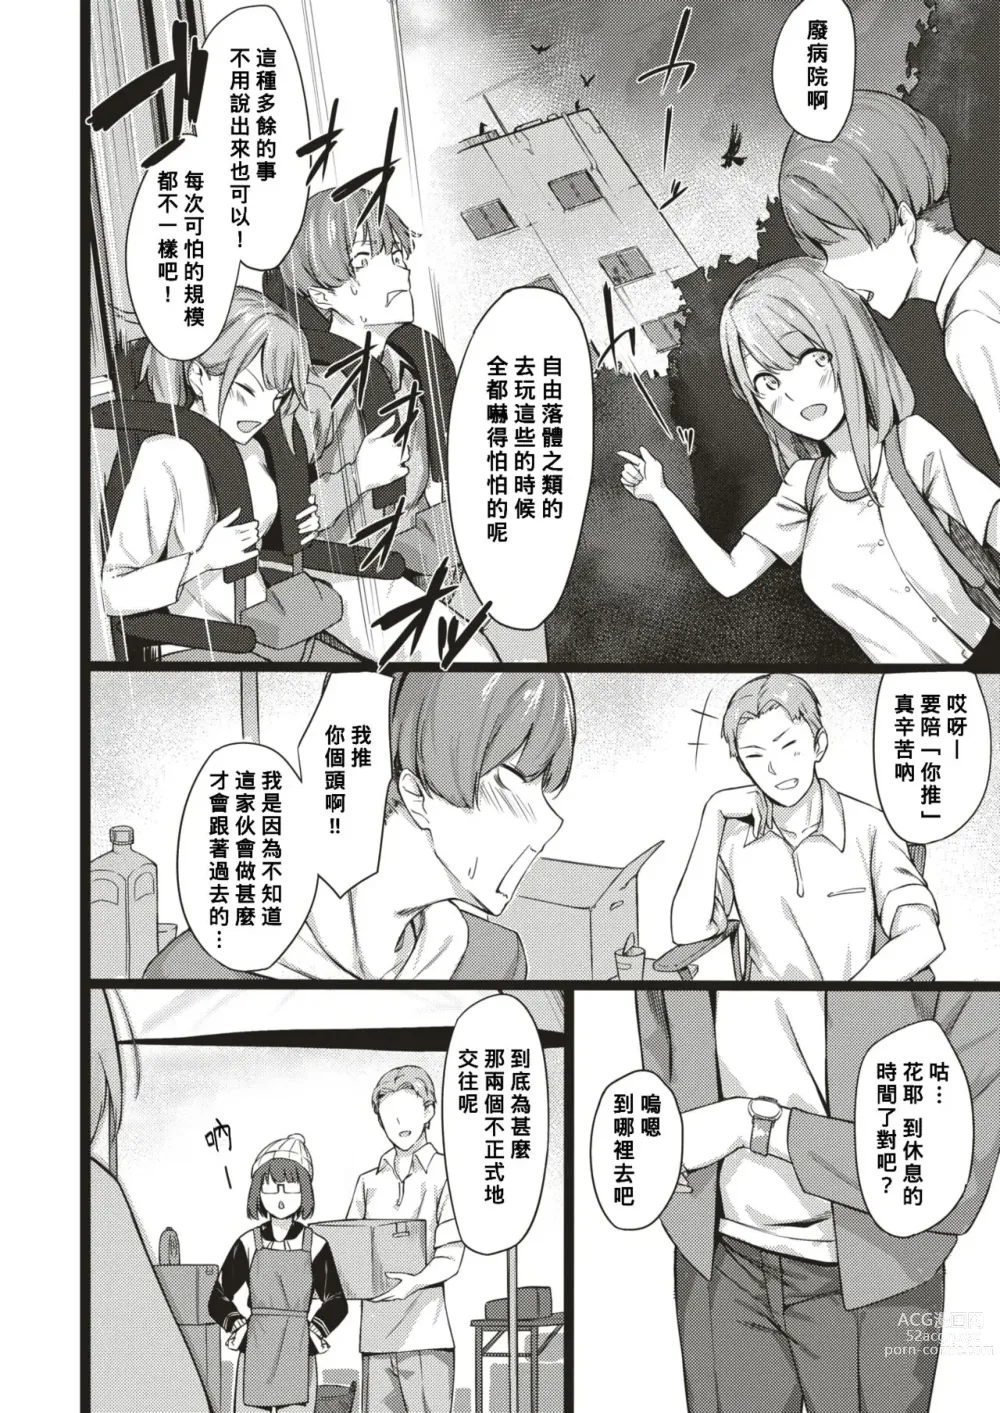 Page 4 of manga Koukai Kakurenbo - What is inside the secret hole?